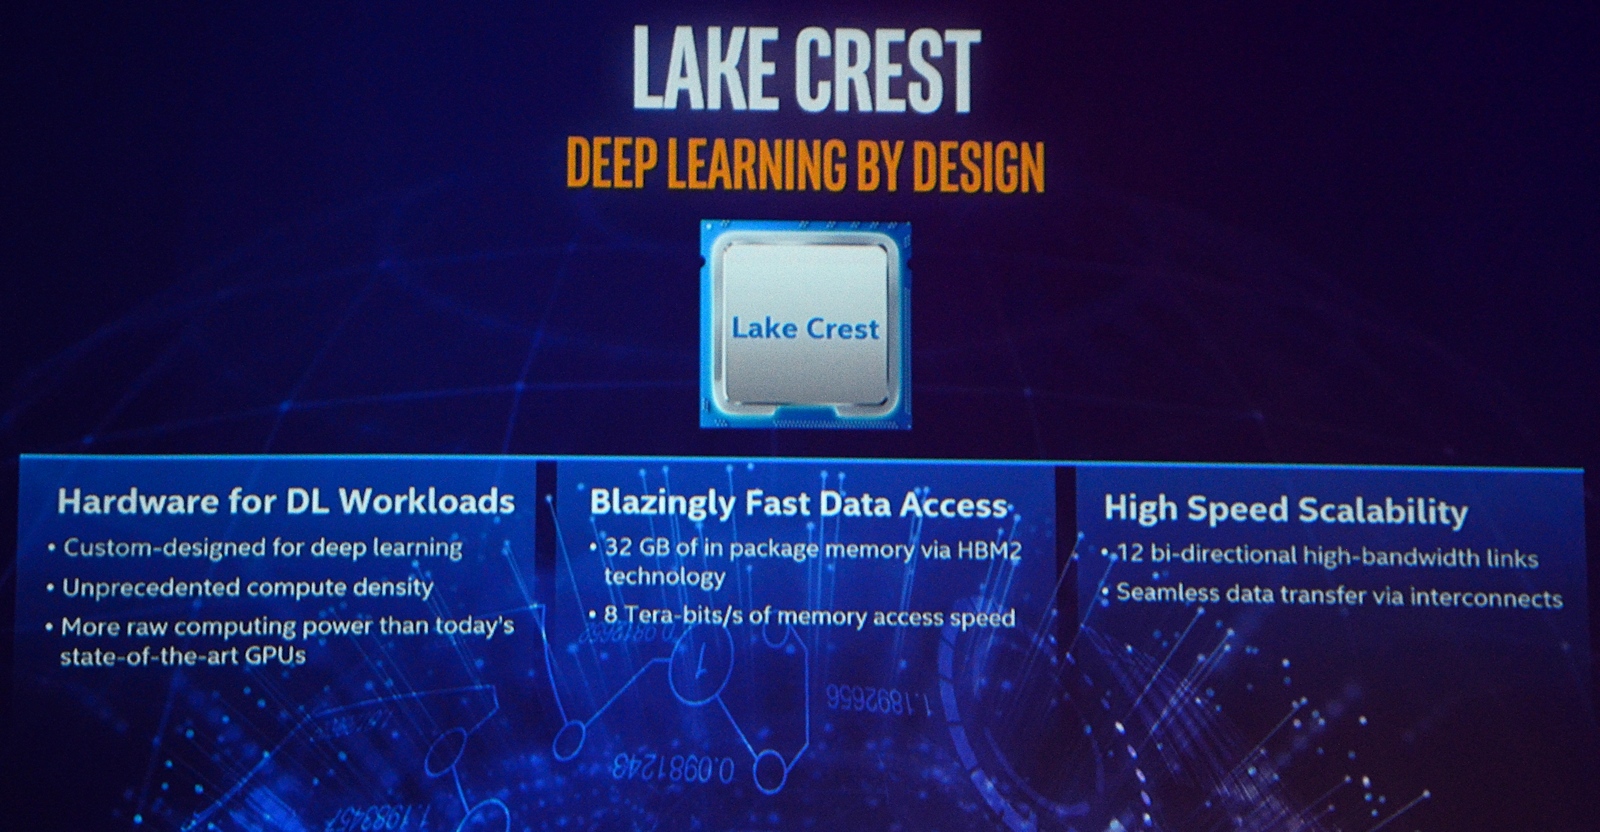 Intel-Xeon-Lake-Crest-Deep-Learning-Features.jpg